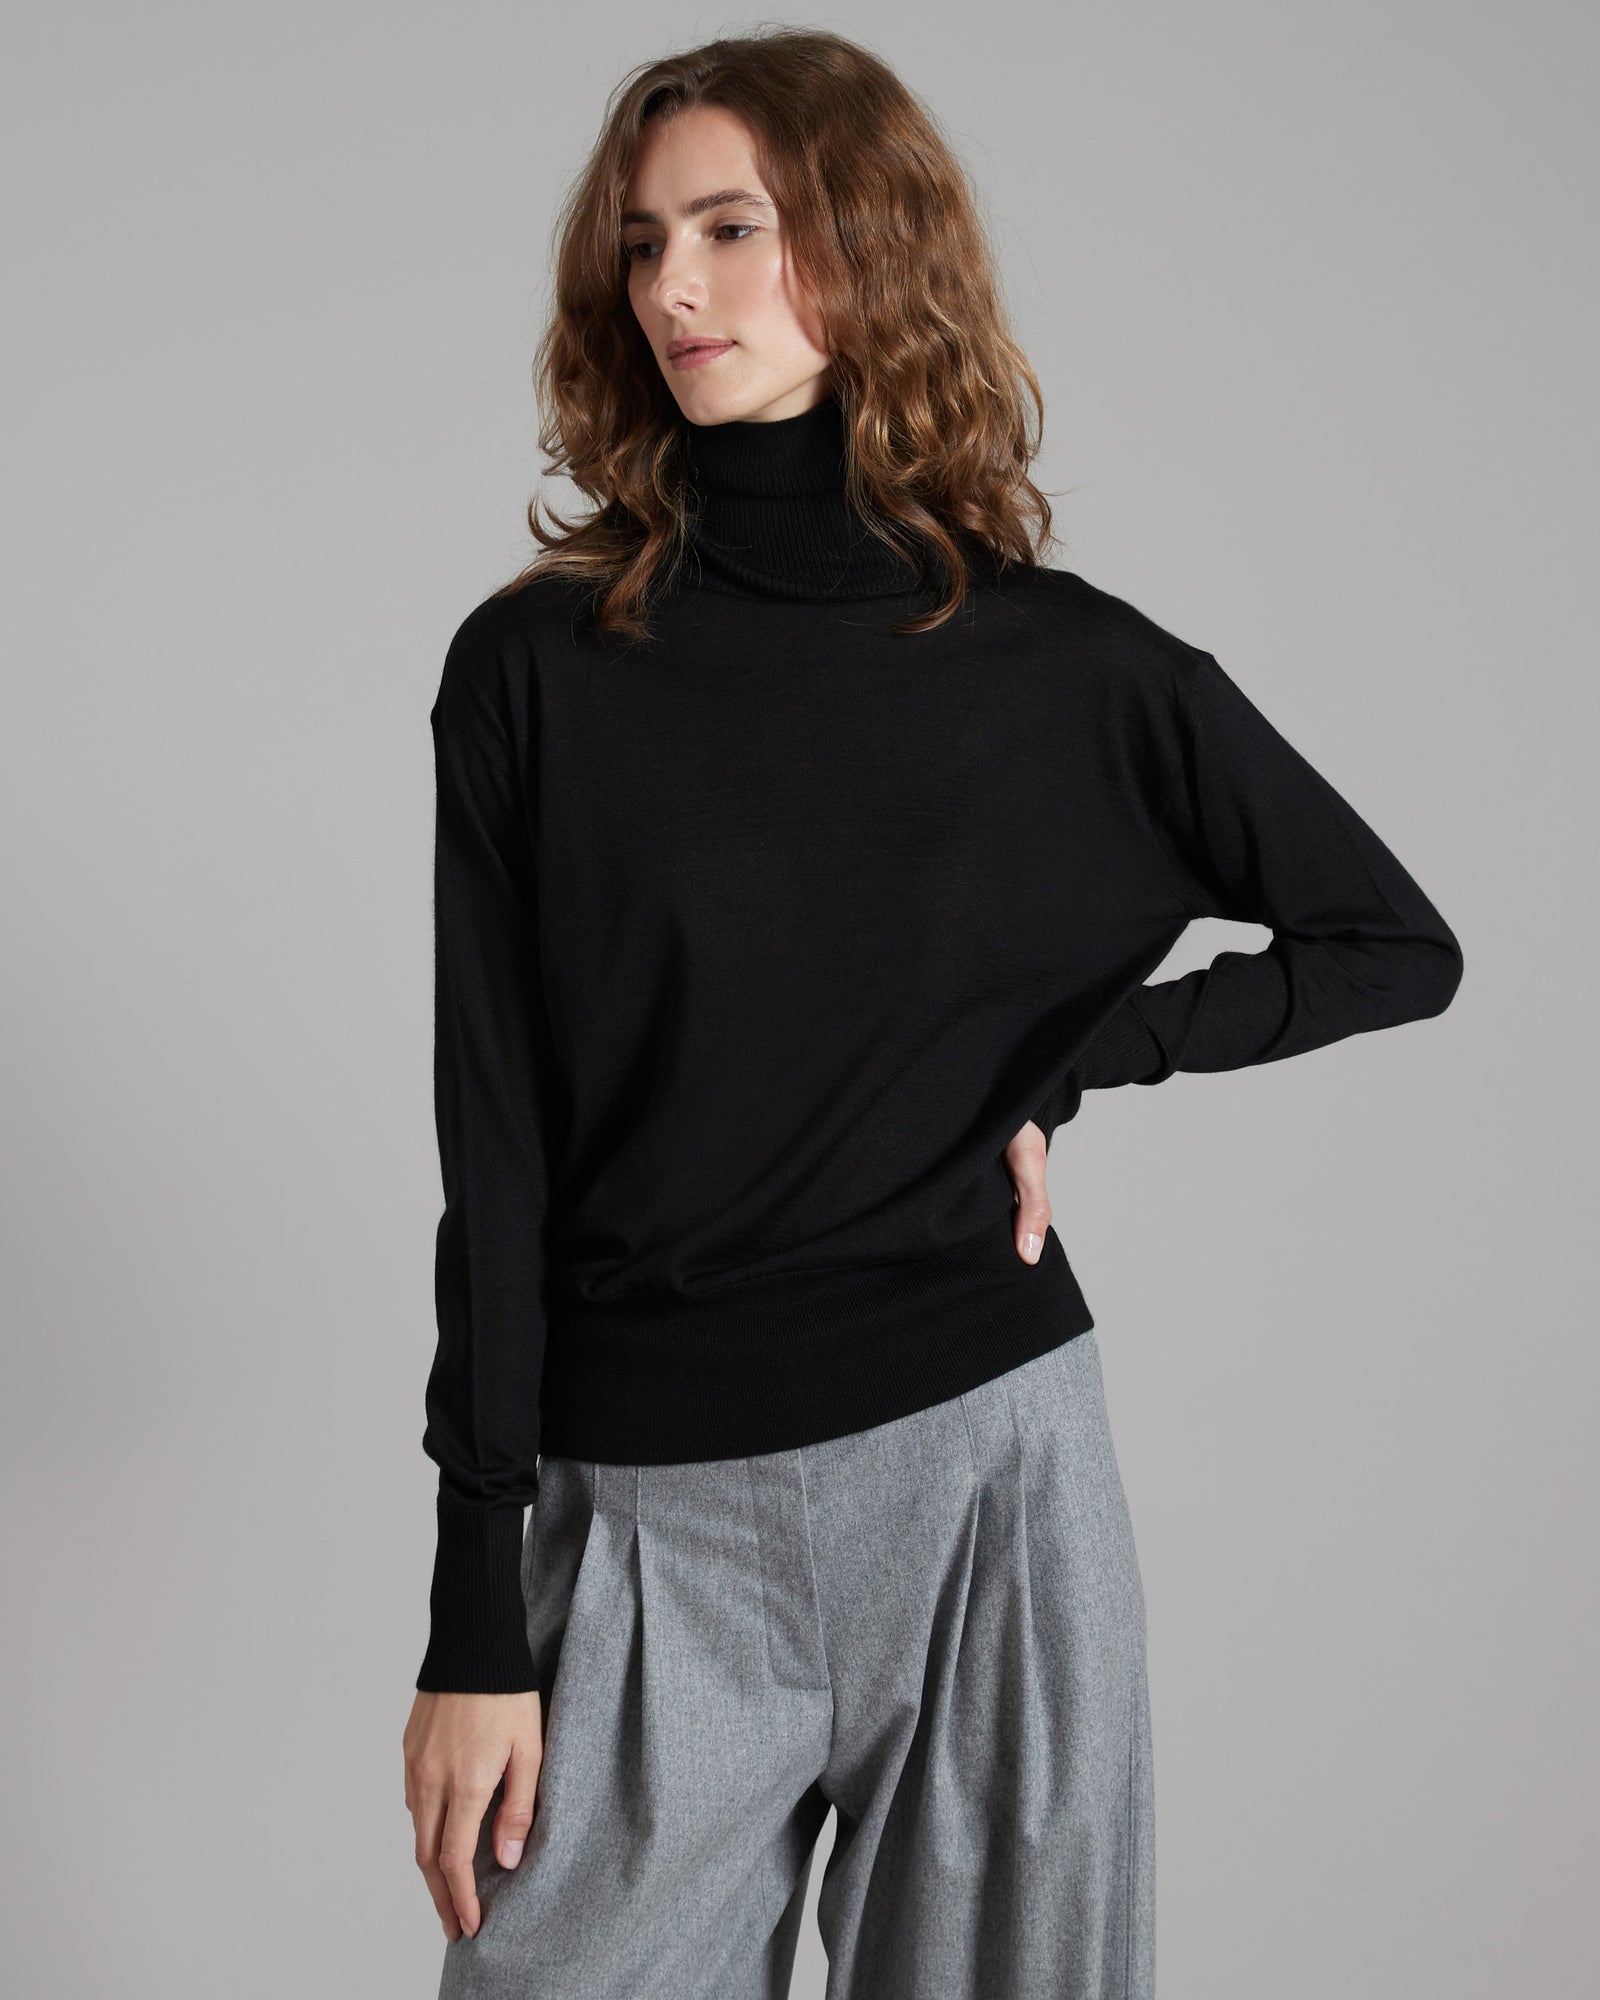 Black cashmere and silk turtleneck sweater